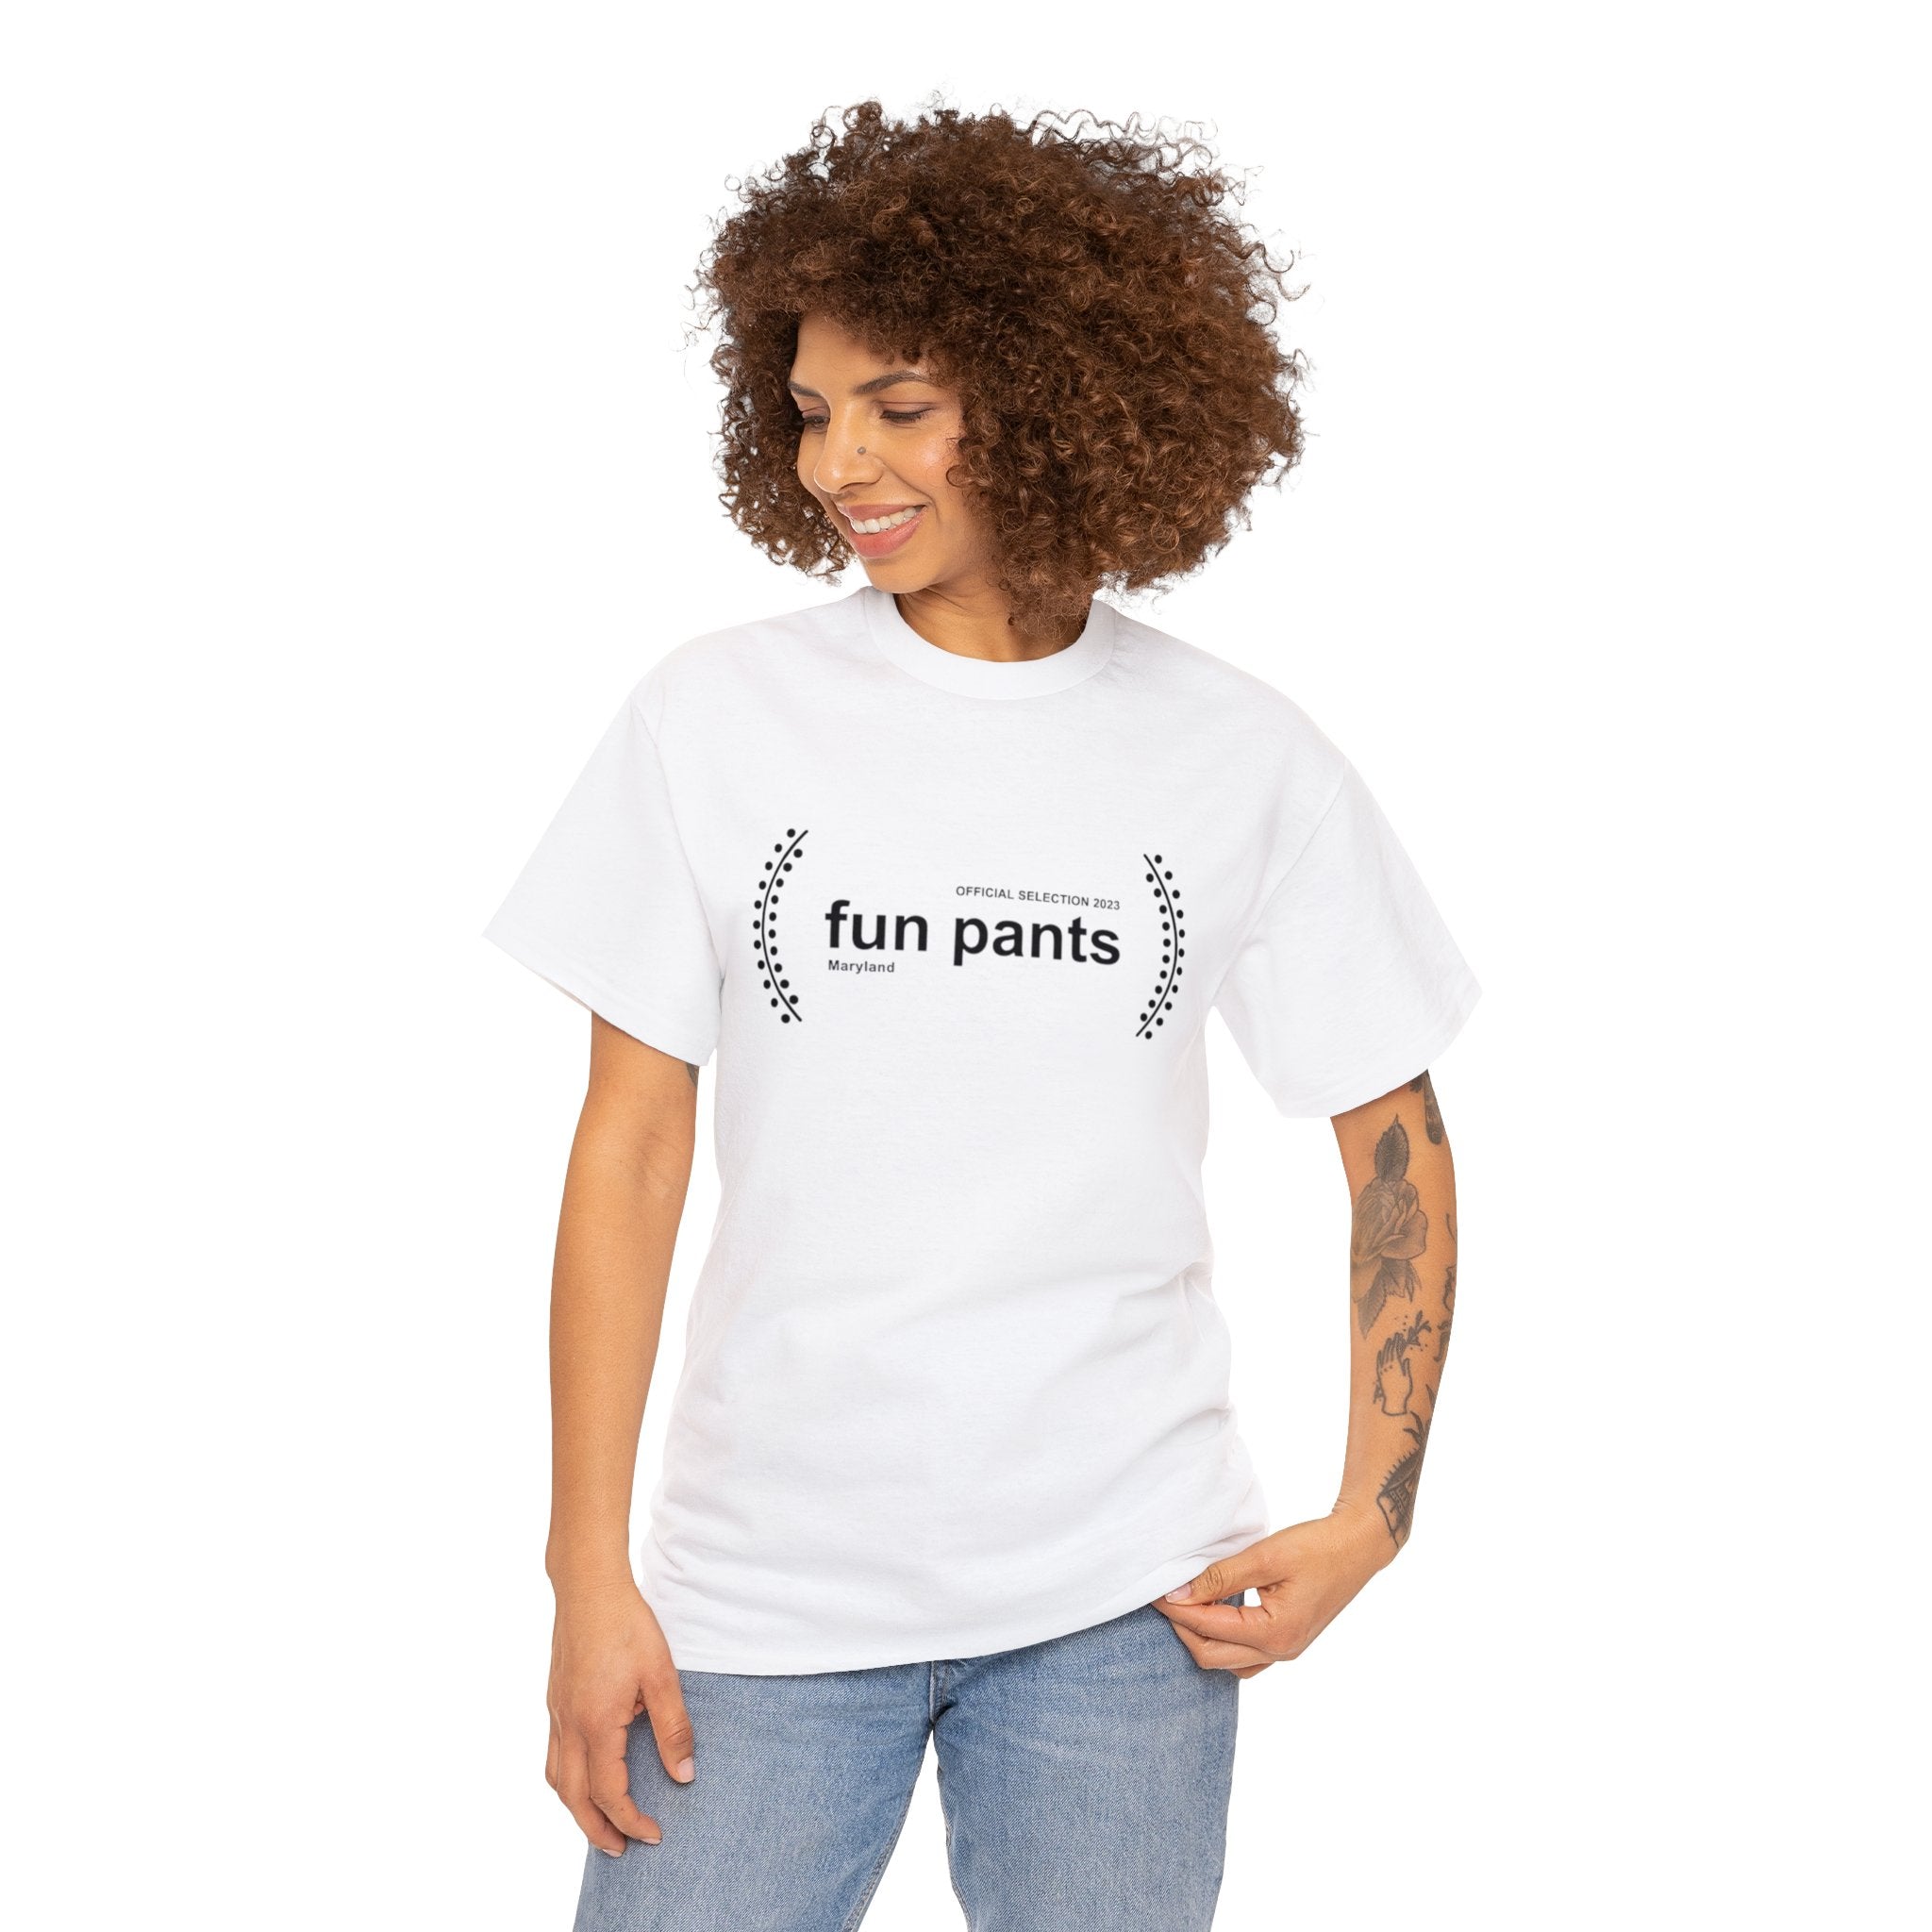 Fun pants T-Shirt